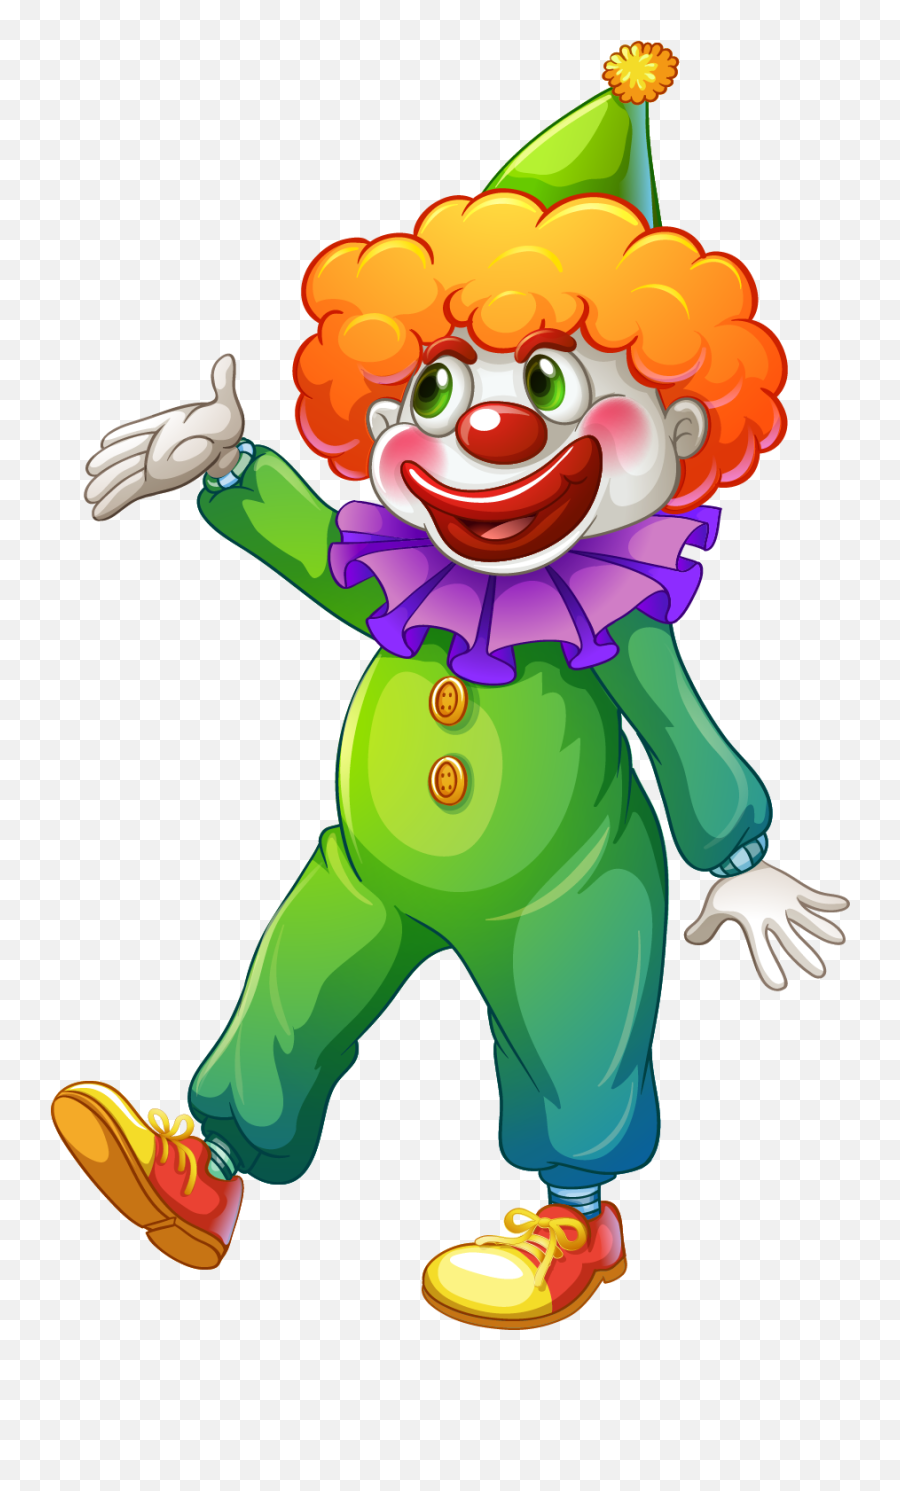 Clown Png Free Download - Clowns Cartoon,It Clown Png